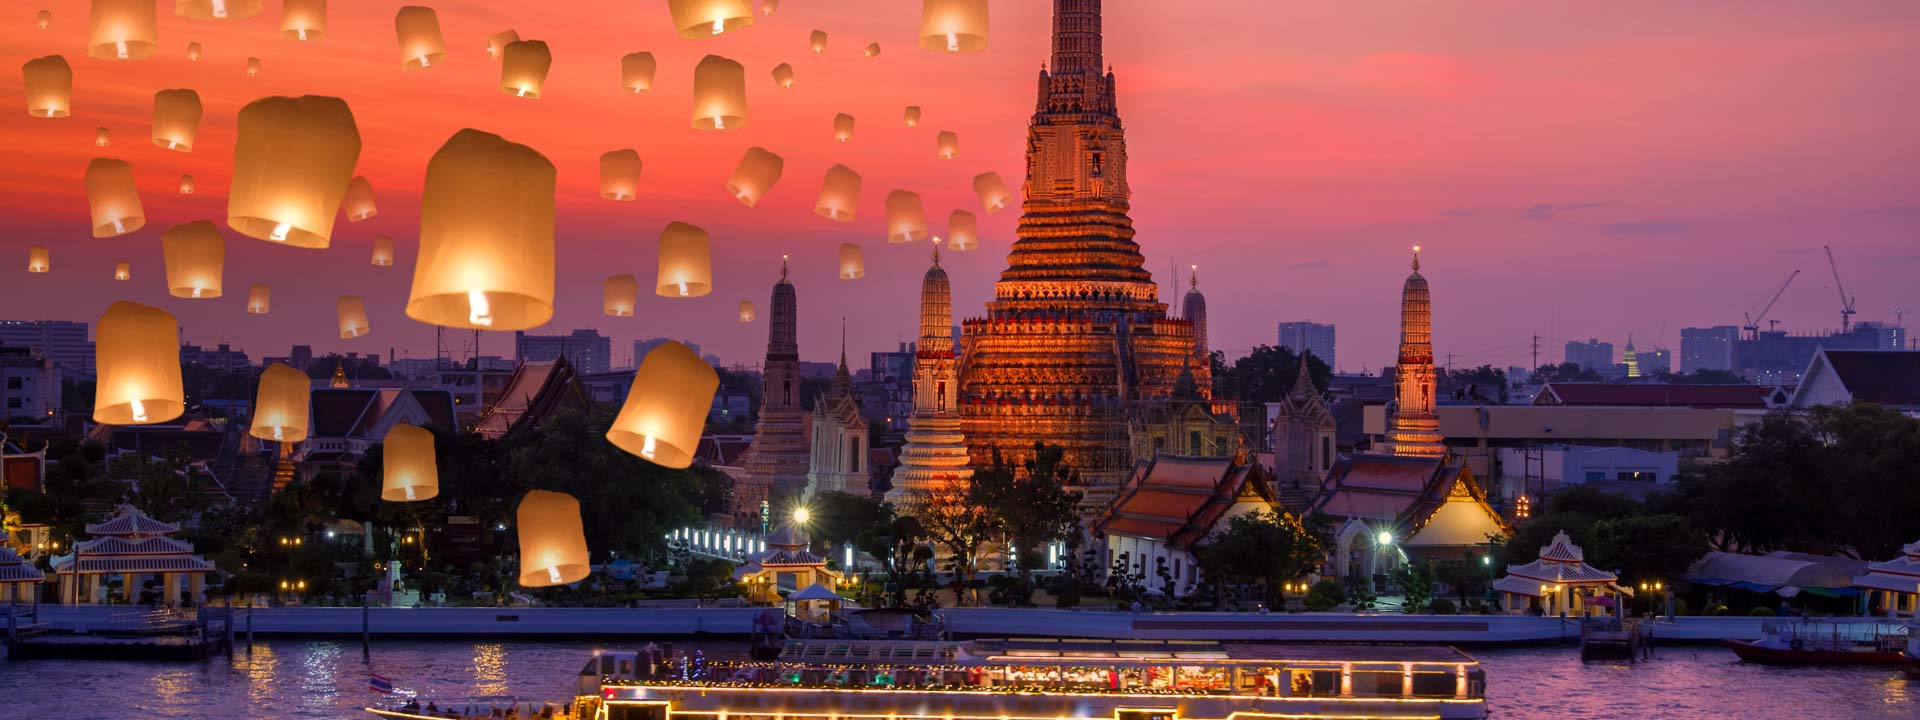 Adventure Awaits - Thailand Cambodia Vietnam Tour 3 weeks